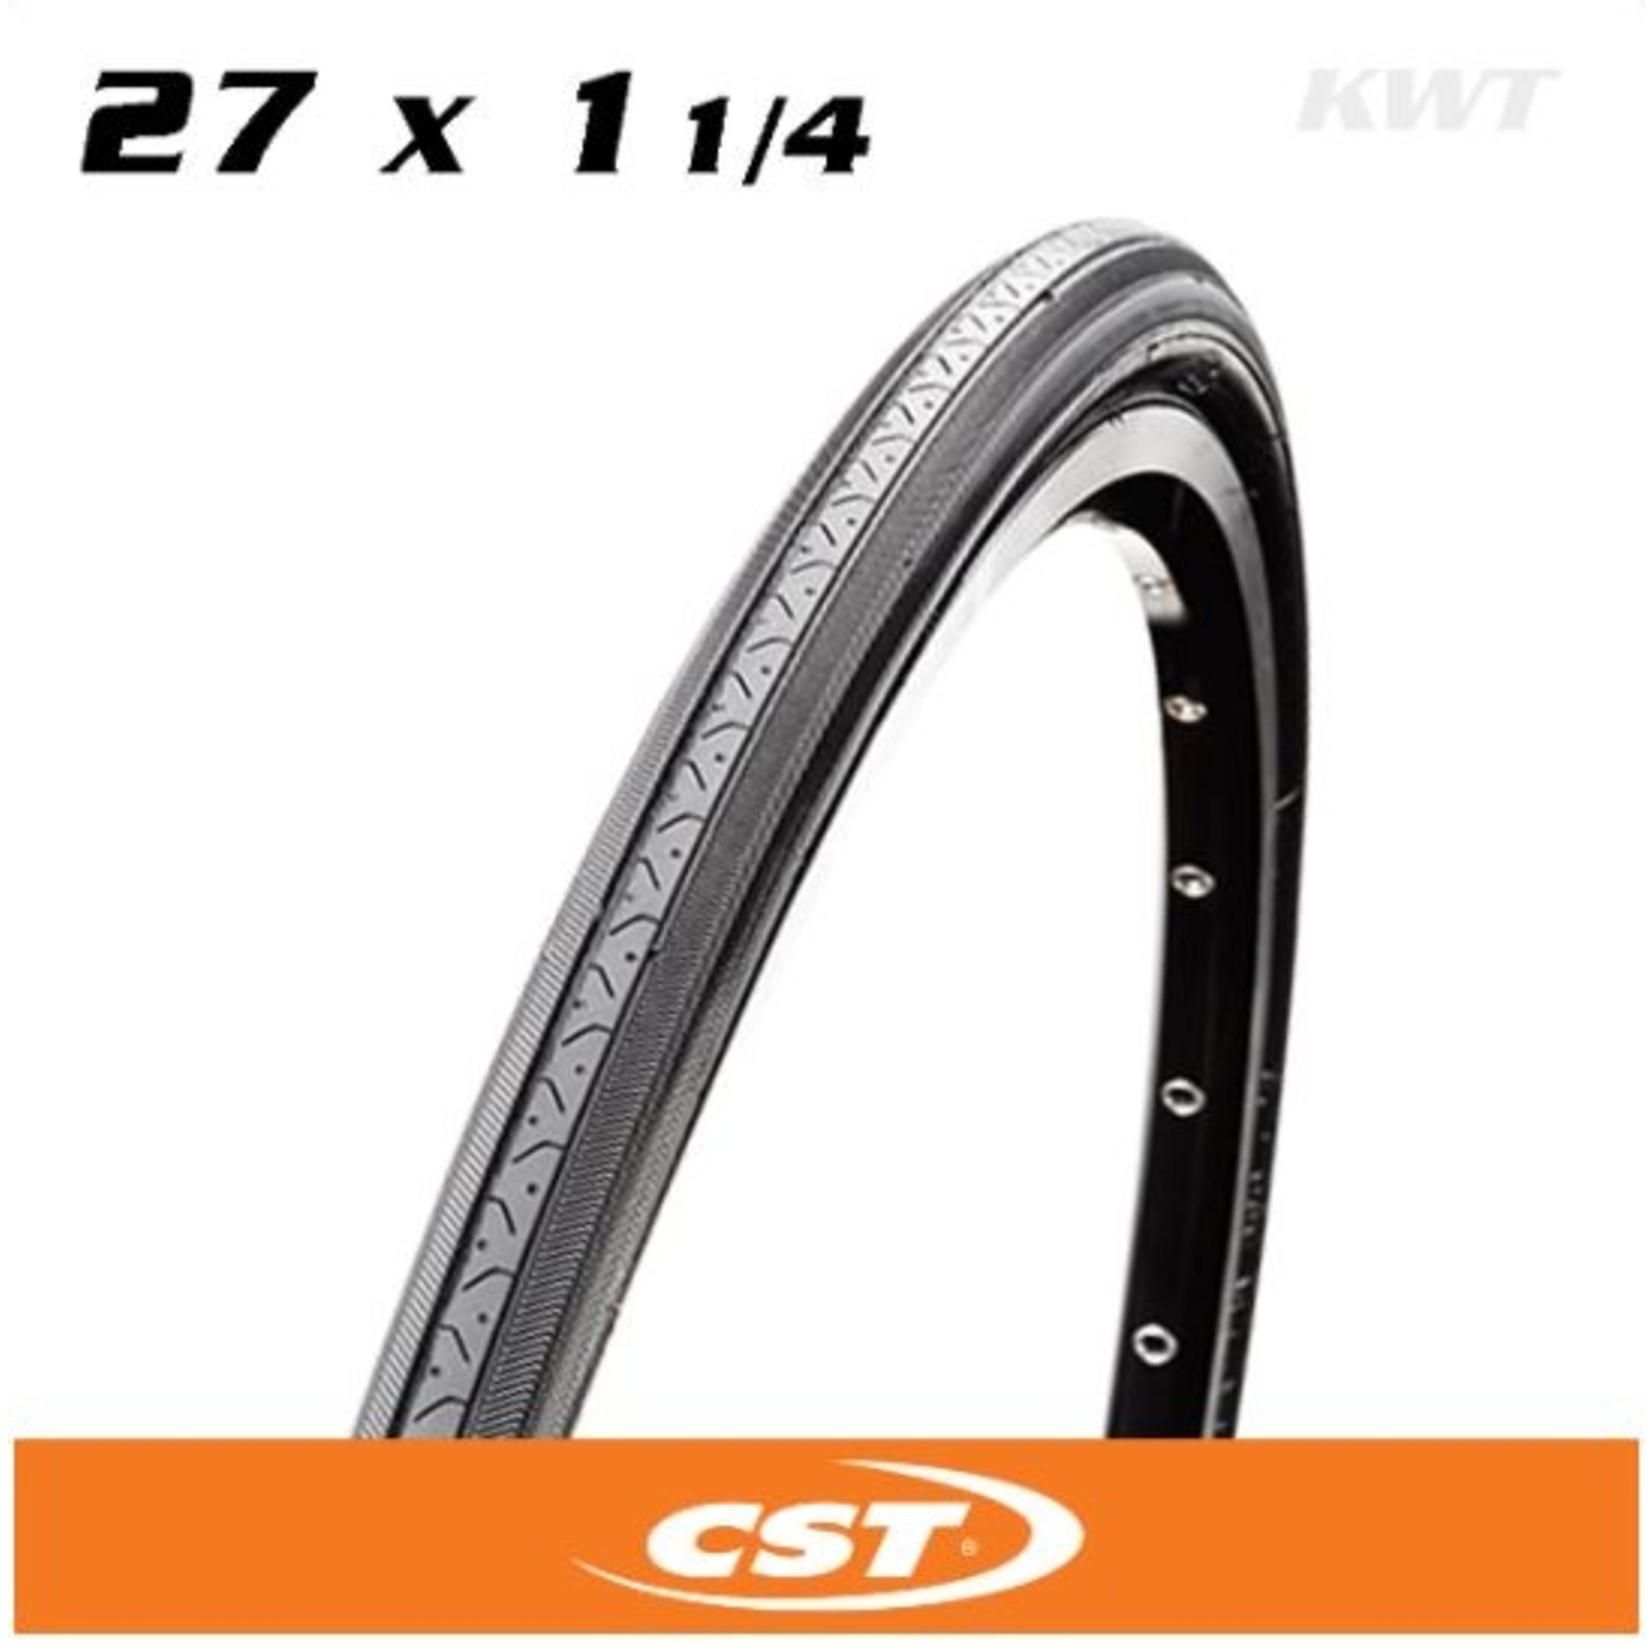 CST CST Bike Tyre - C638 - 27 X 1 1/4 - 90PSI - Pair Black - C27B